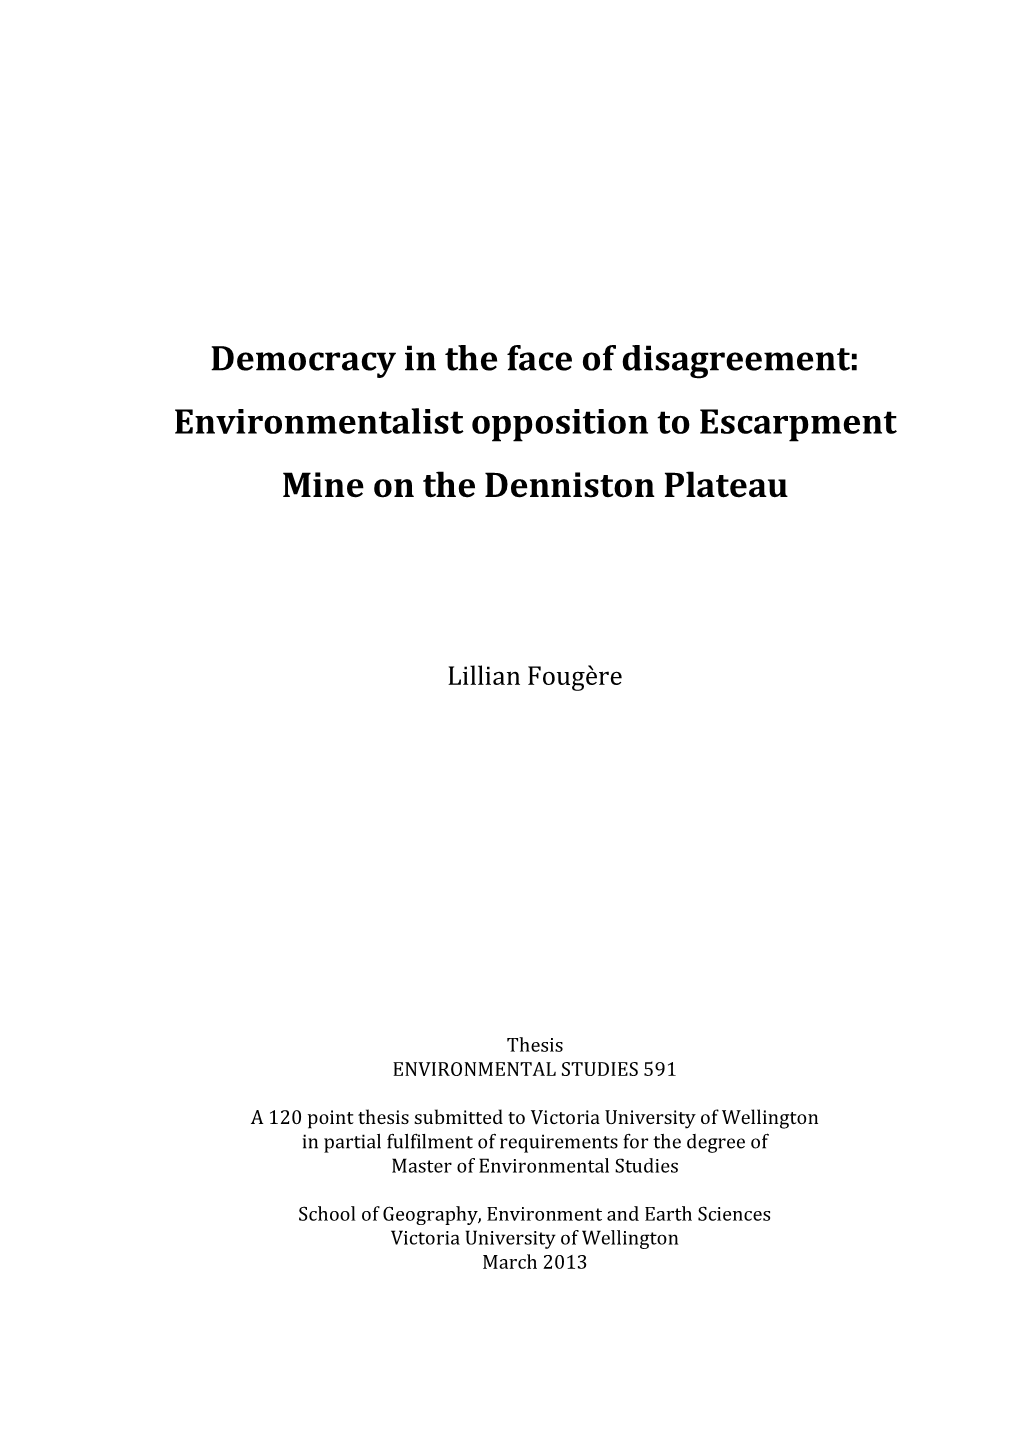 Environmentalist Opposition to Escarpment Mine on the Denniston Plateau